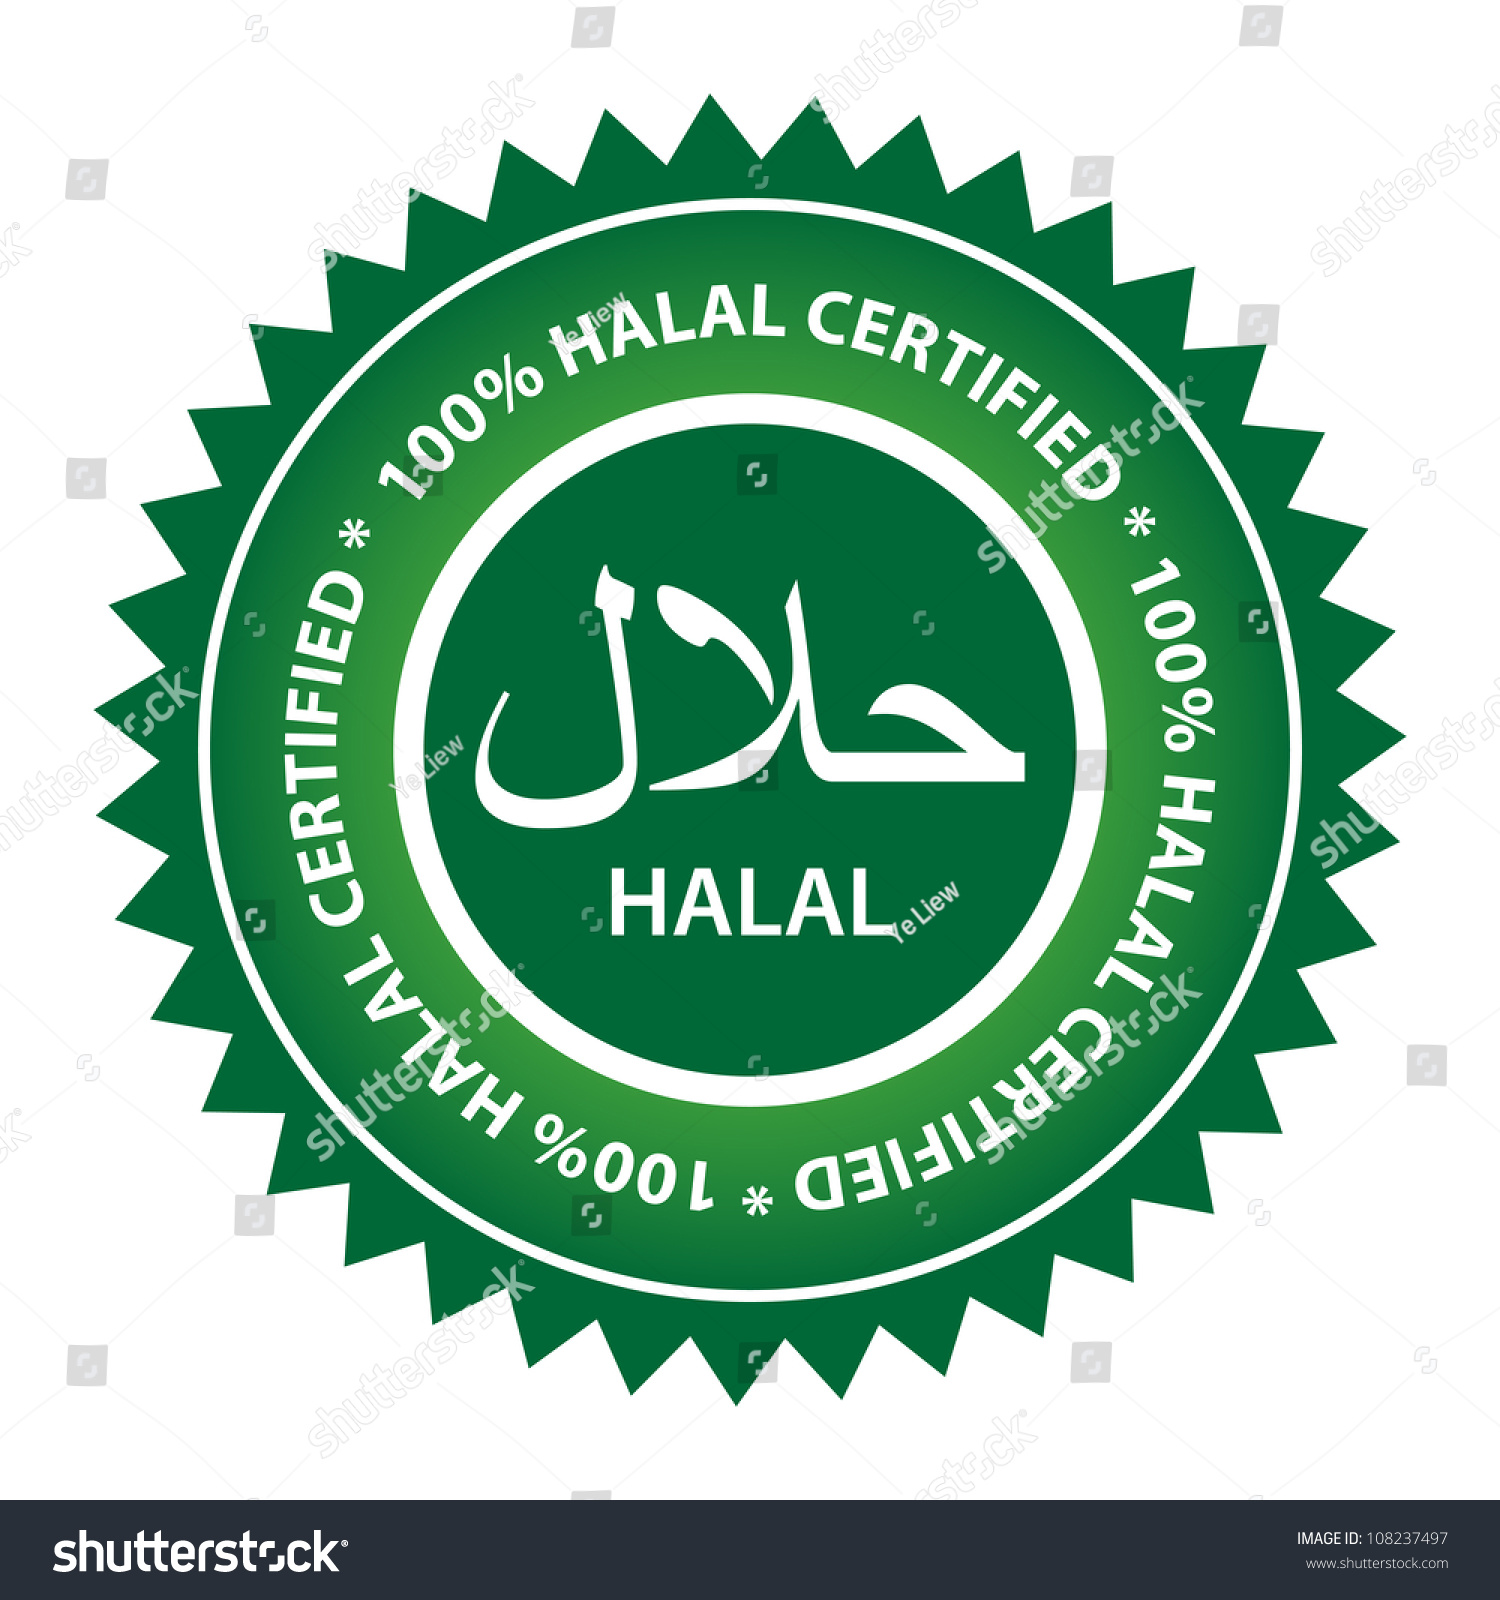 Is binary option halal